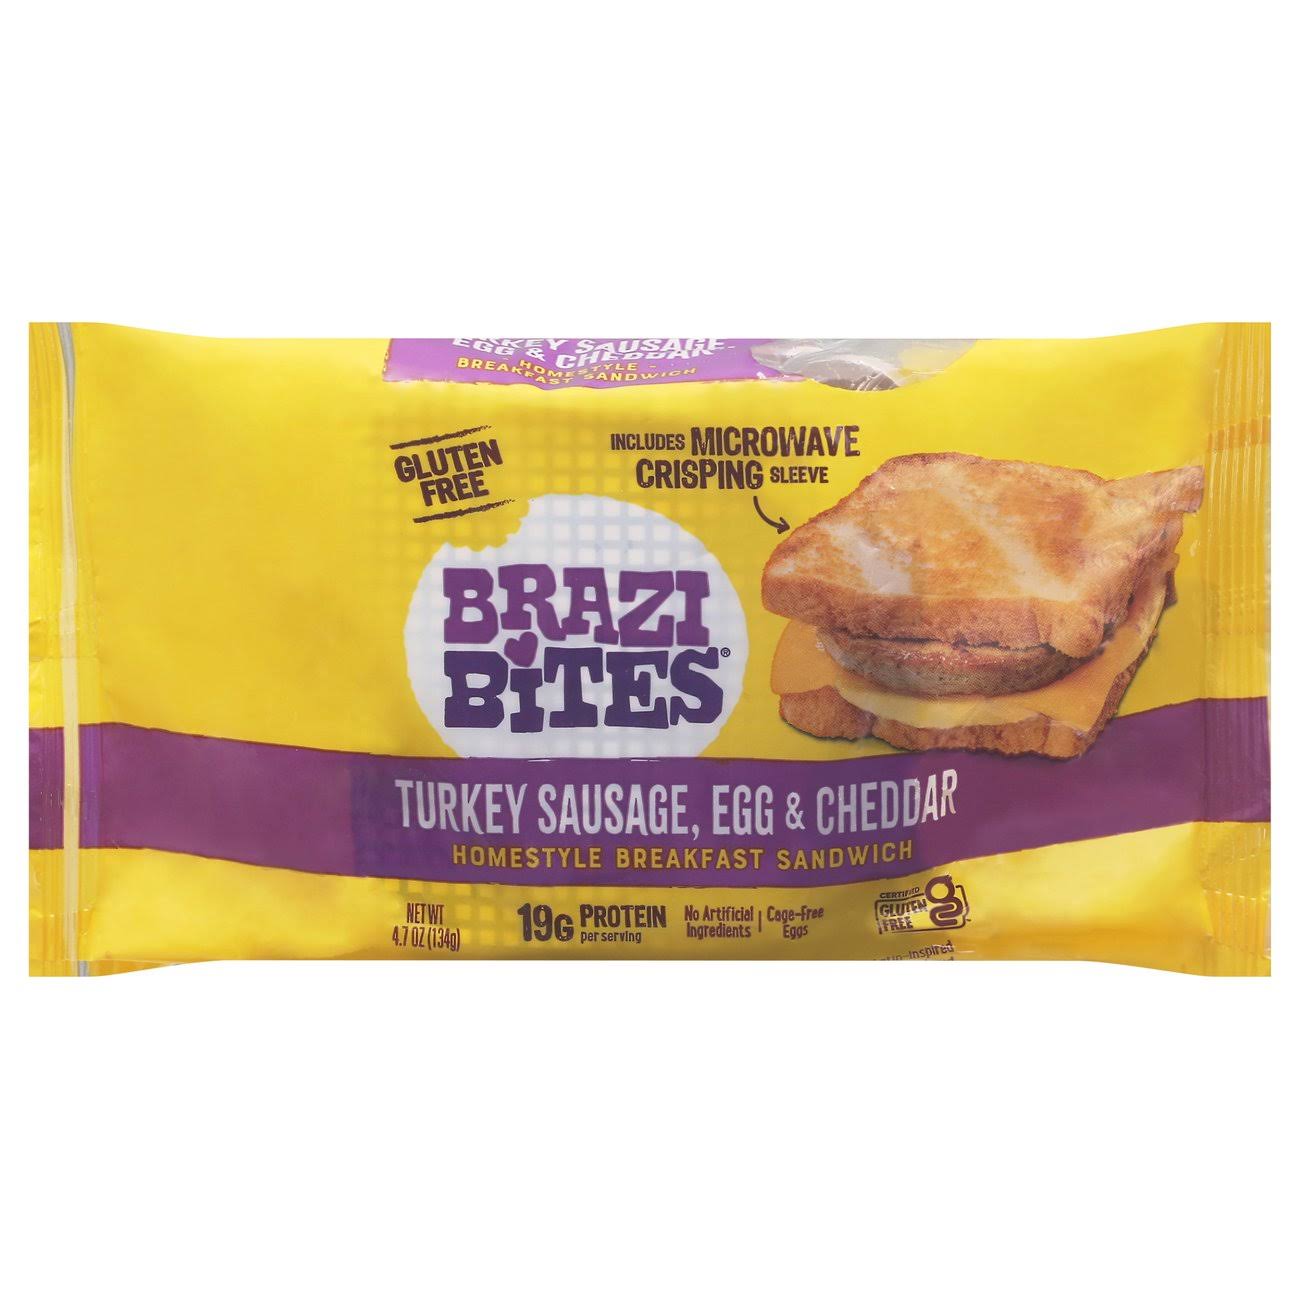 Brazi Bites Breakfast Sandwich, Turkey Sausage, Egg & Cheddar, Homestyle - 4.7 oz